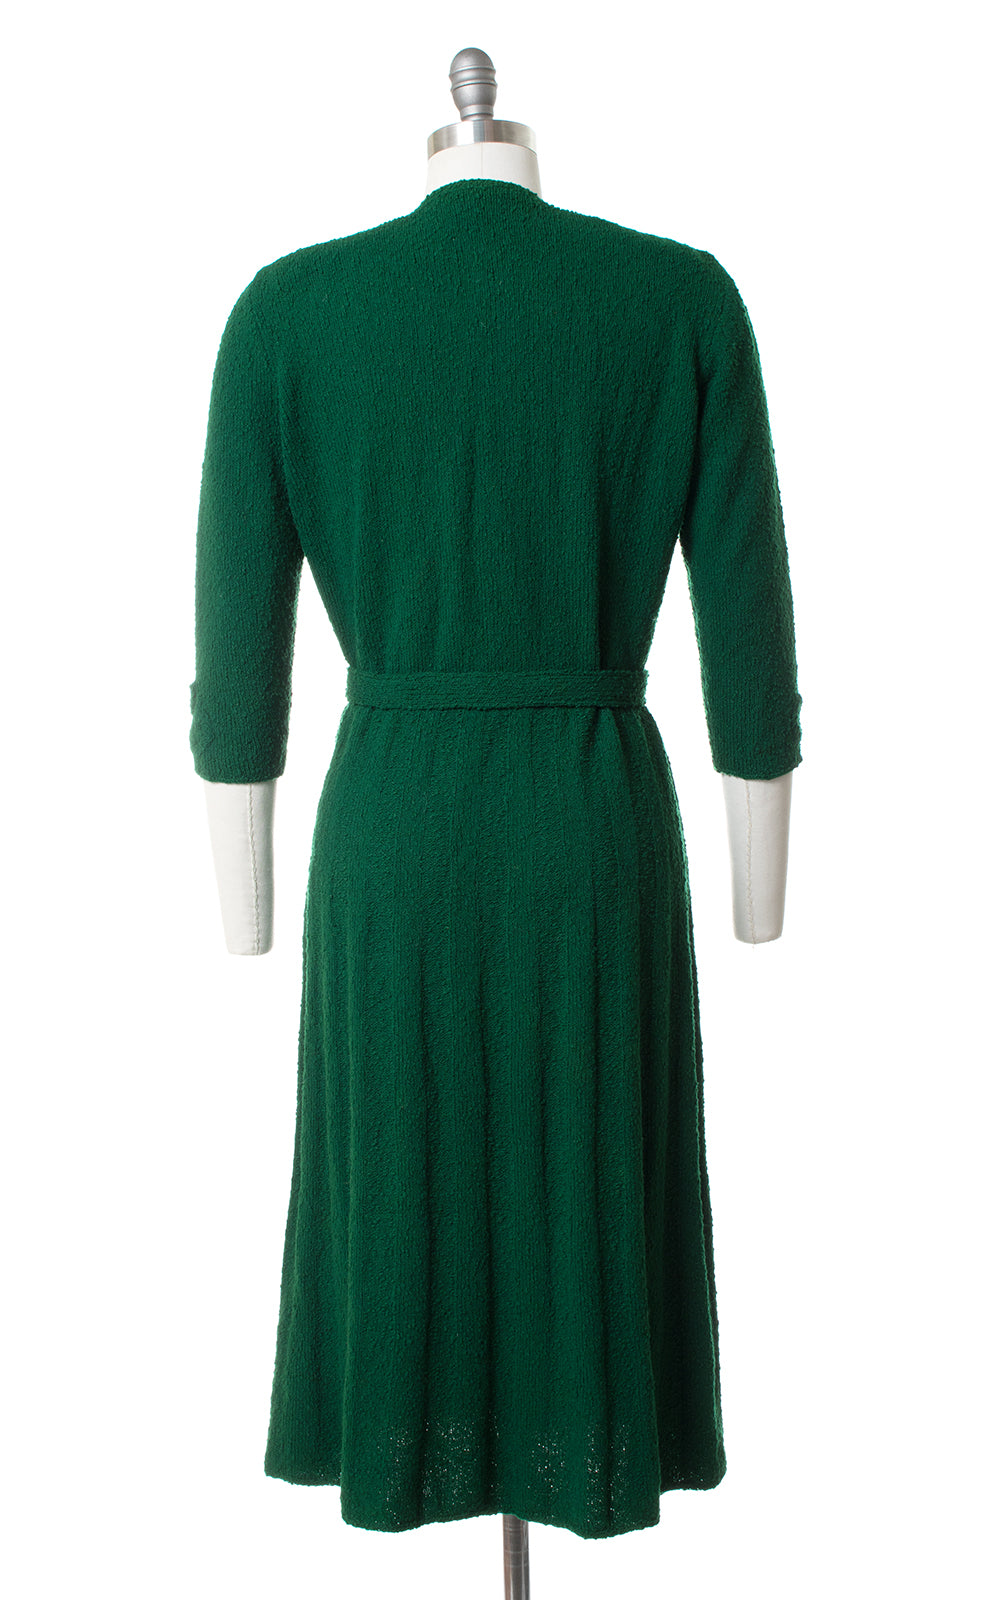 1940s Forest Green Knit Wool Dress